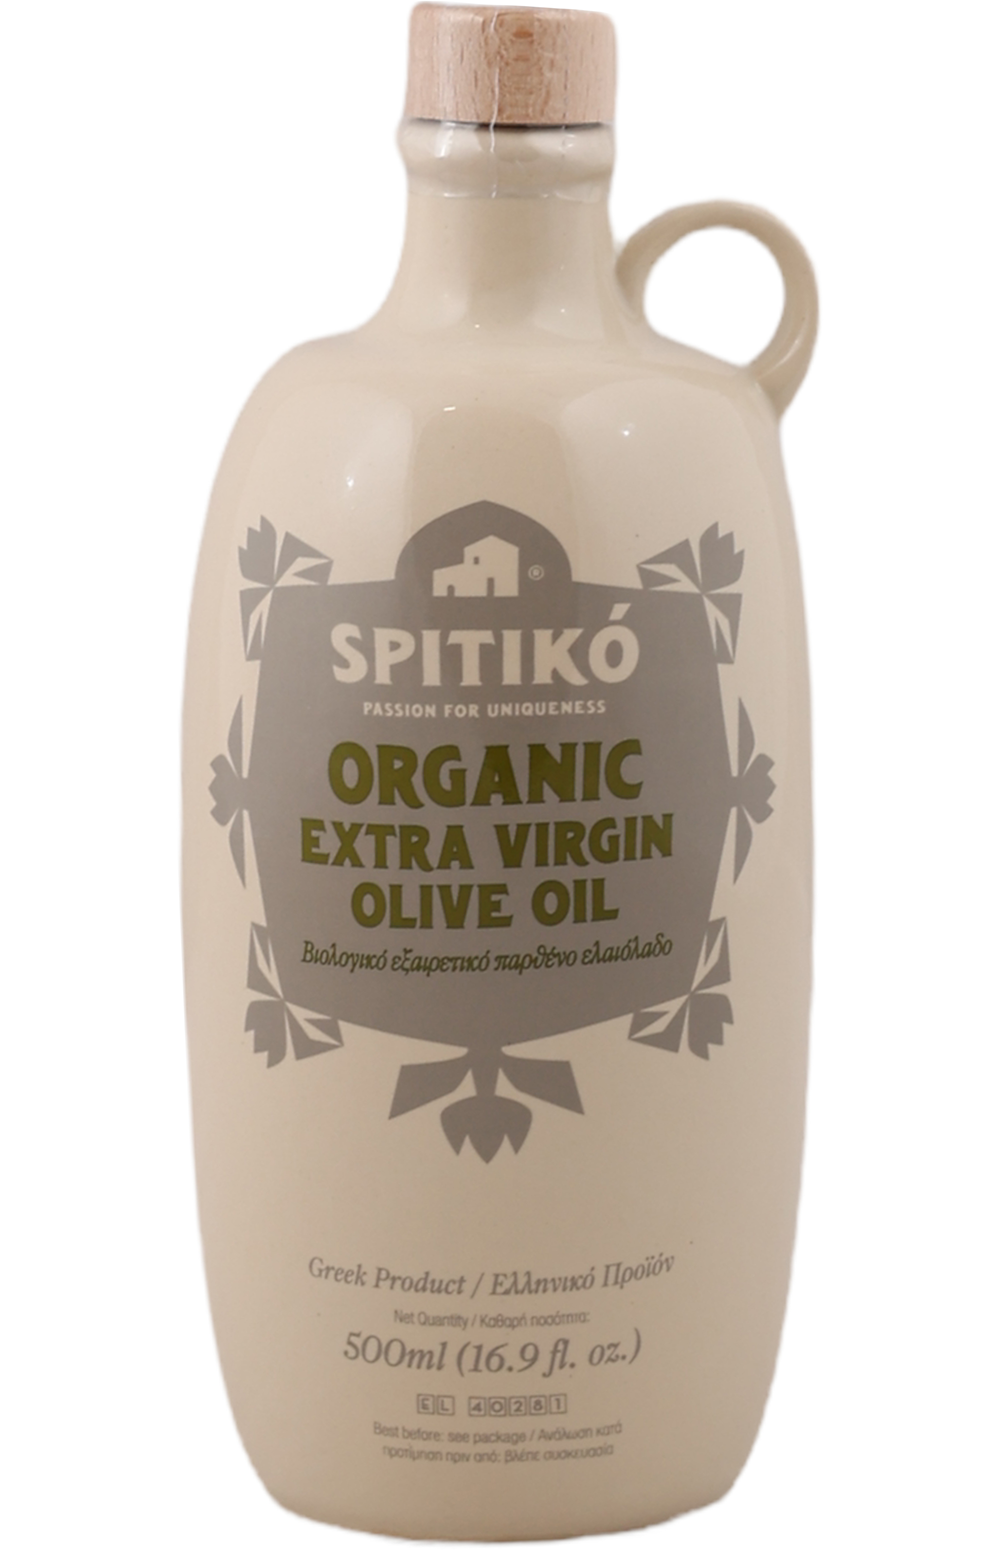 Spitiko- Organic Extra Virgin Olive Oil